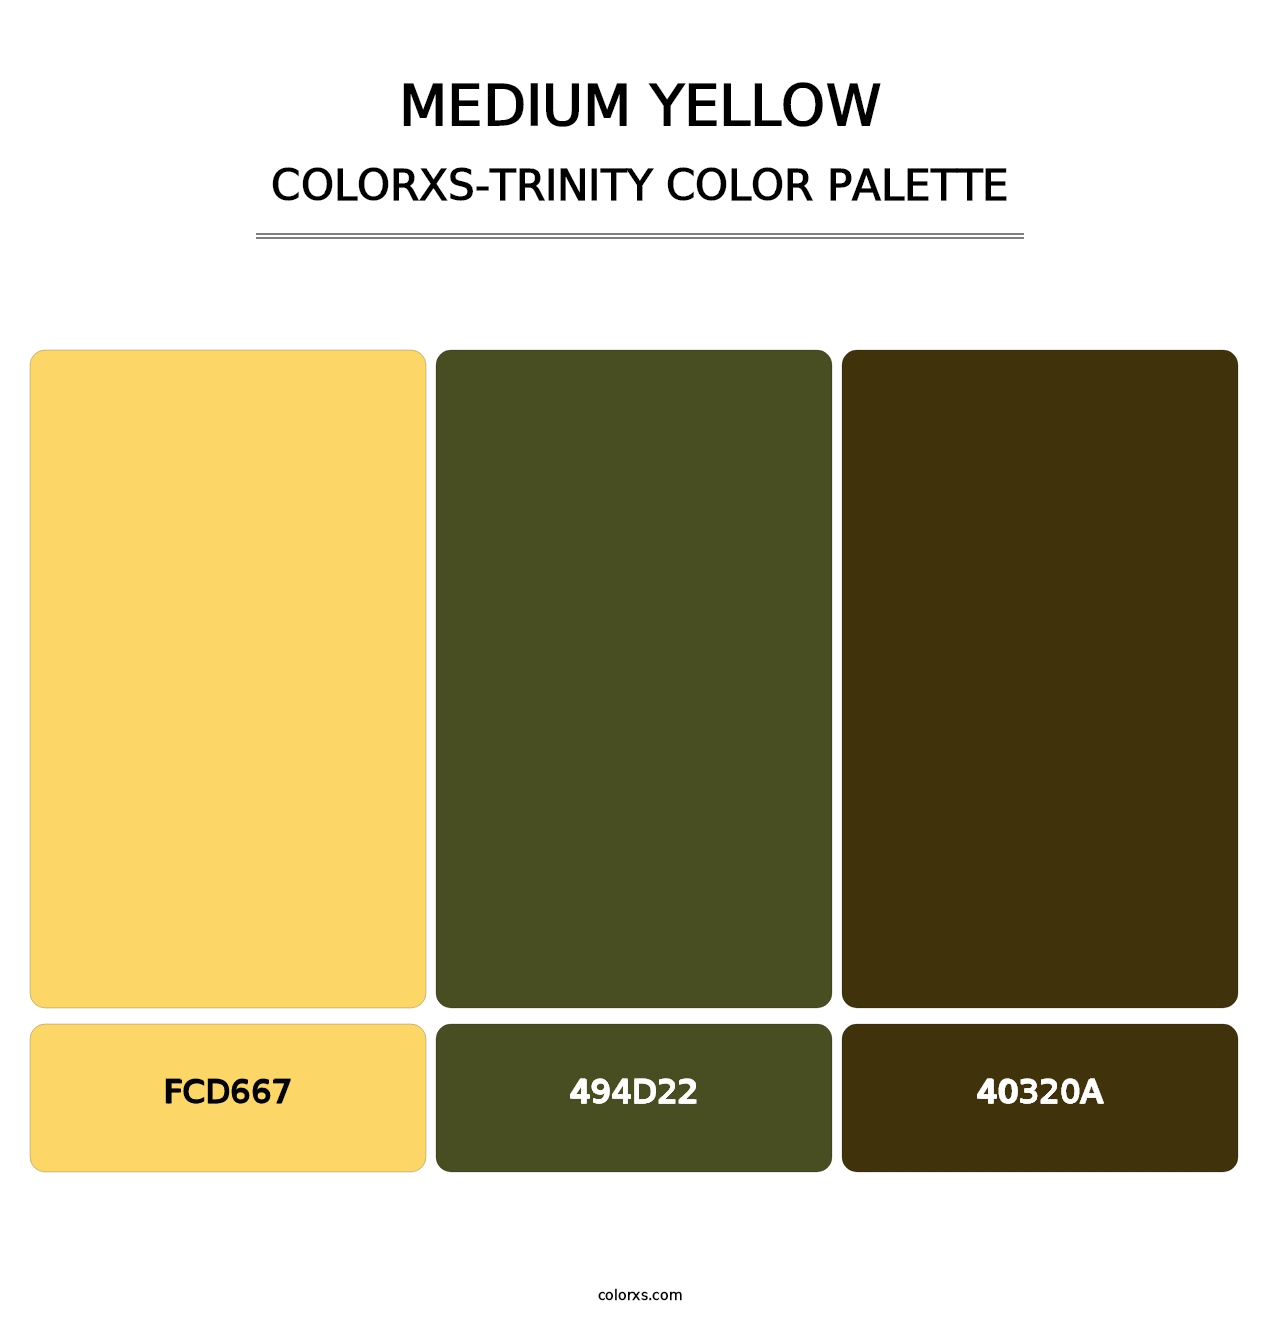 Medium Yellow - Colorxs Trinity Palette